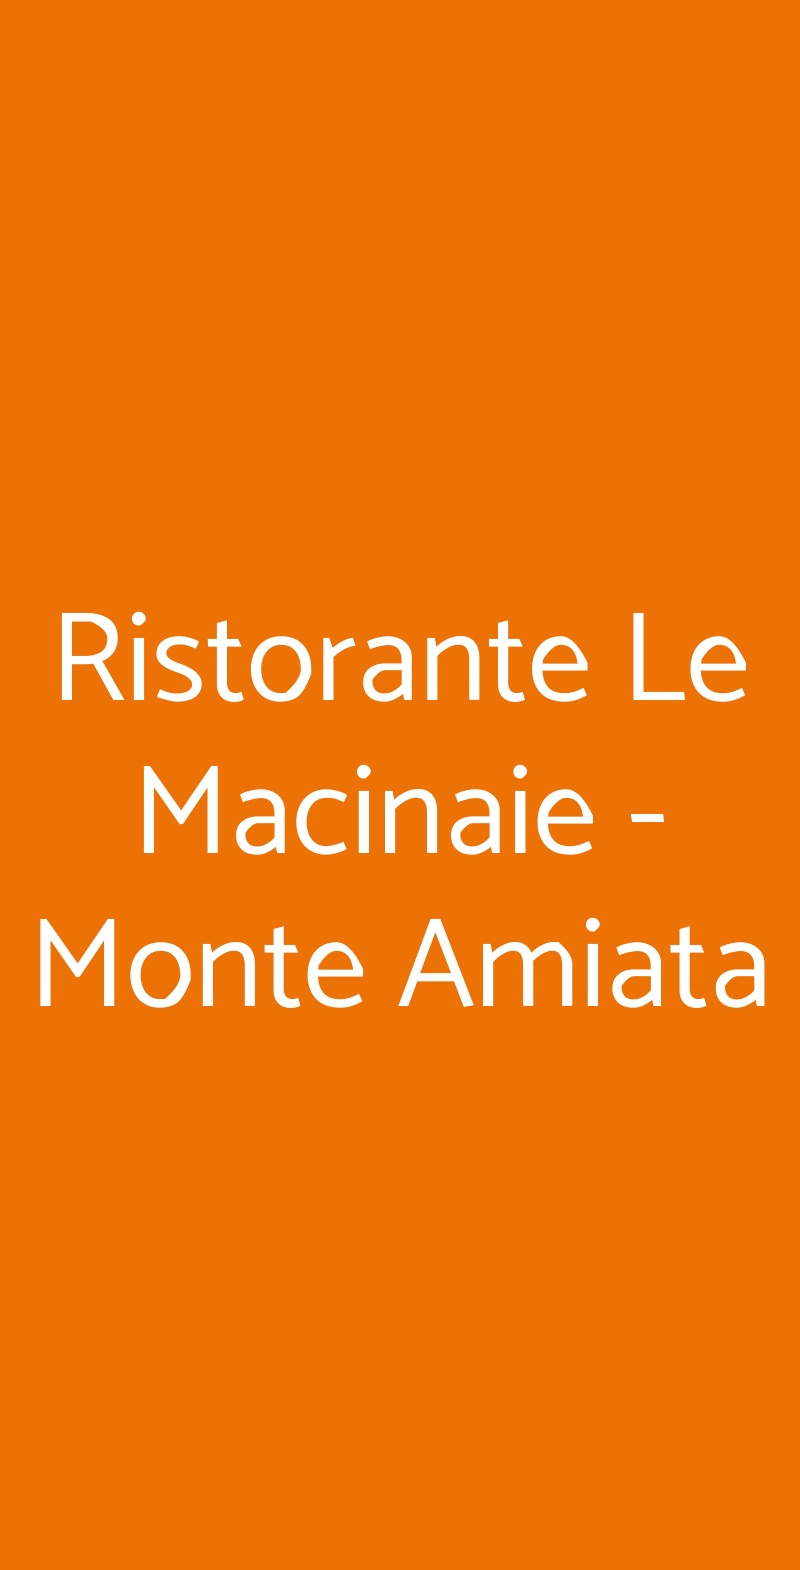 Ristorante Le Macinaie - Monte Amiata Castel Del Piano menù 1 pagina